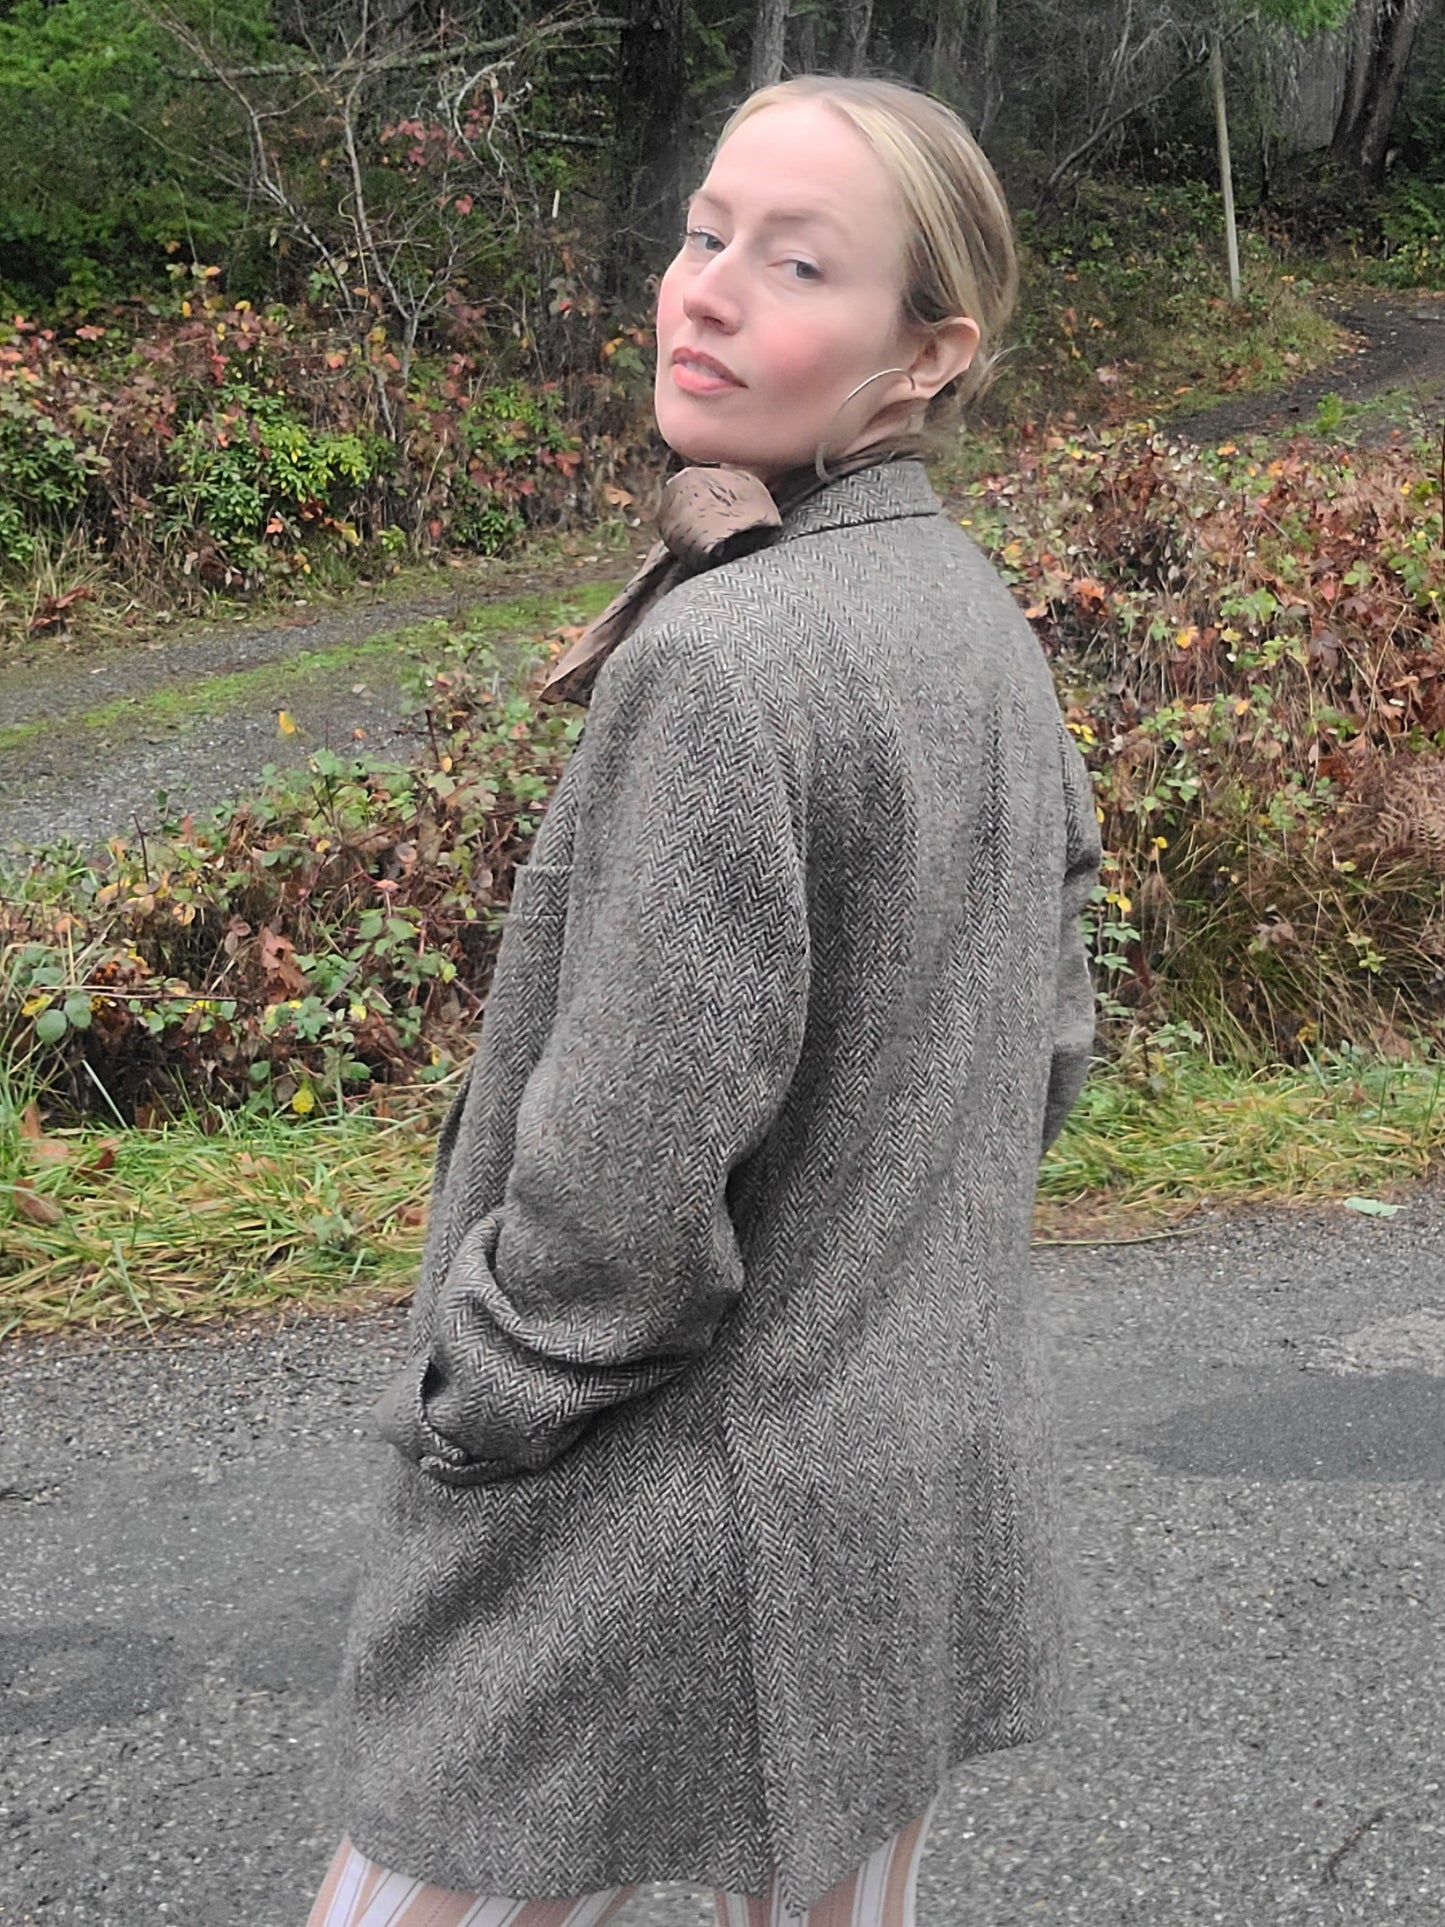 The Professorly Harris Tweed Wool Blazer XL